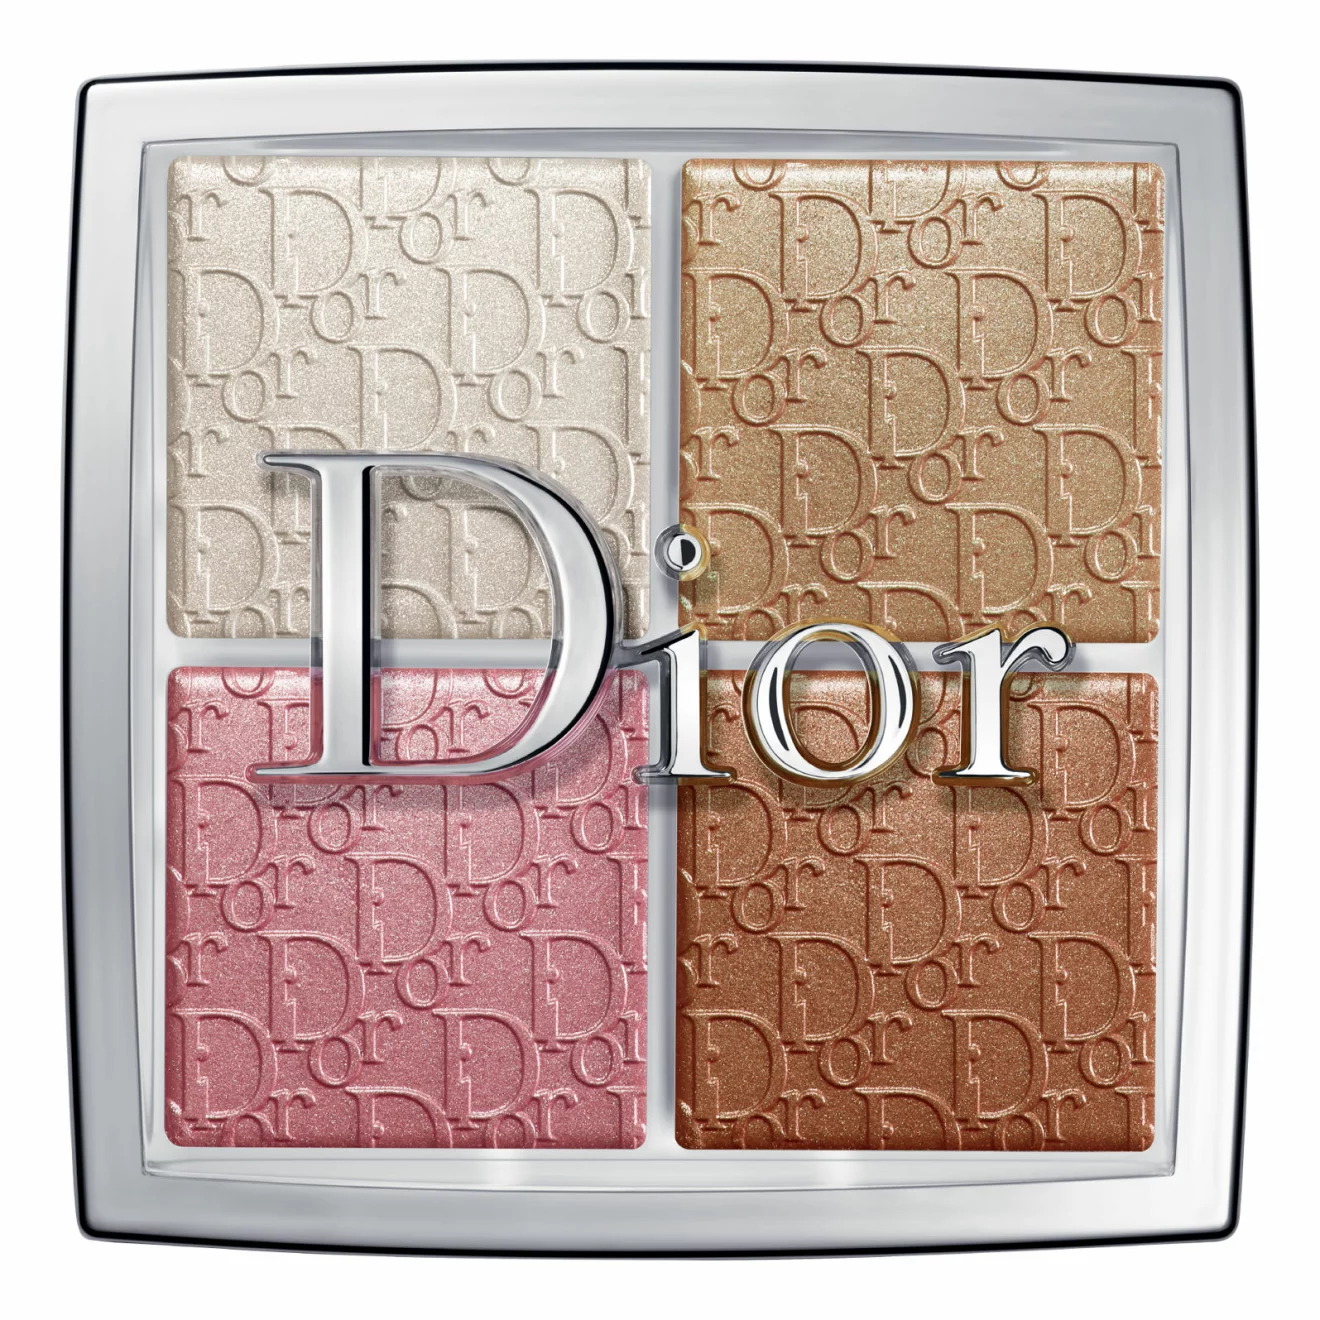 Highlighter paletten glow face palette från Dior Backstage.